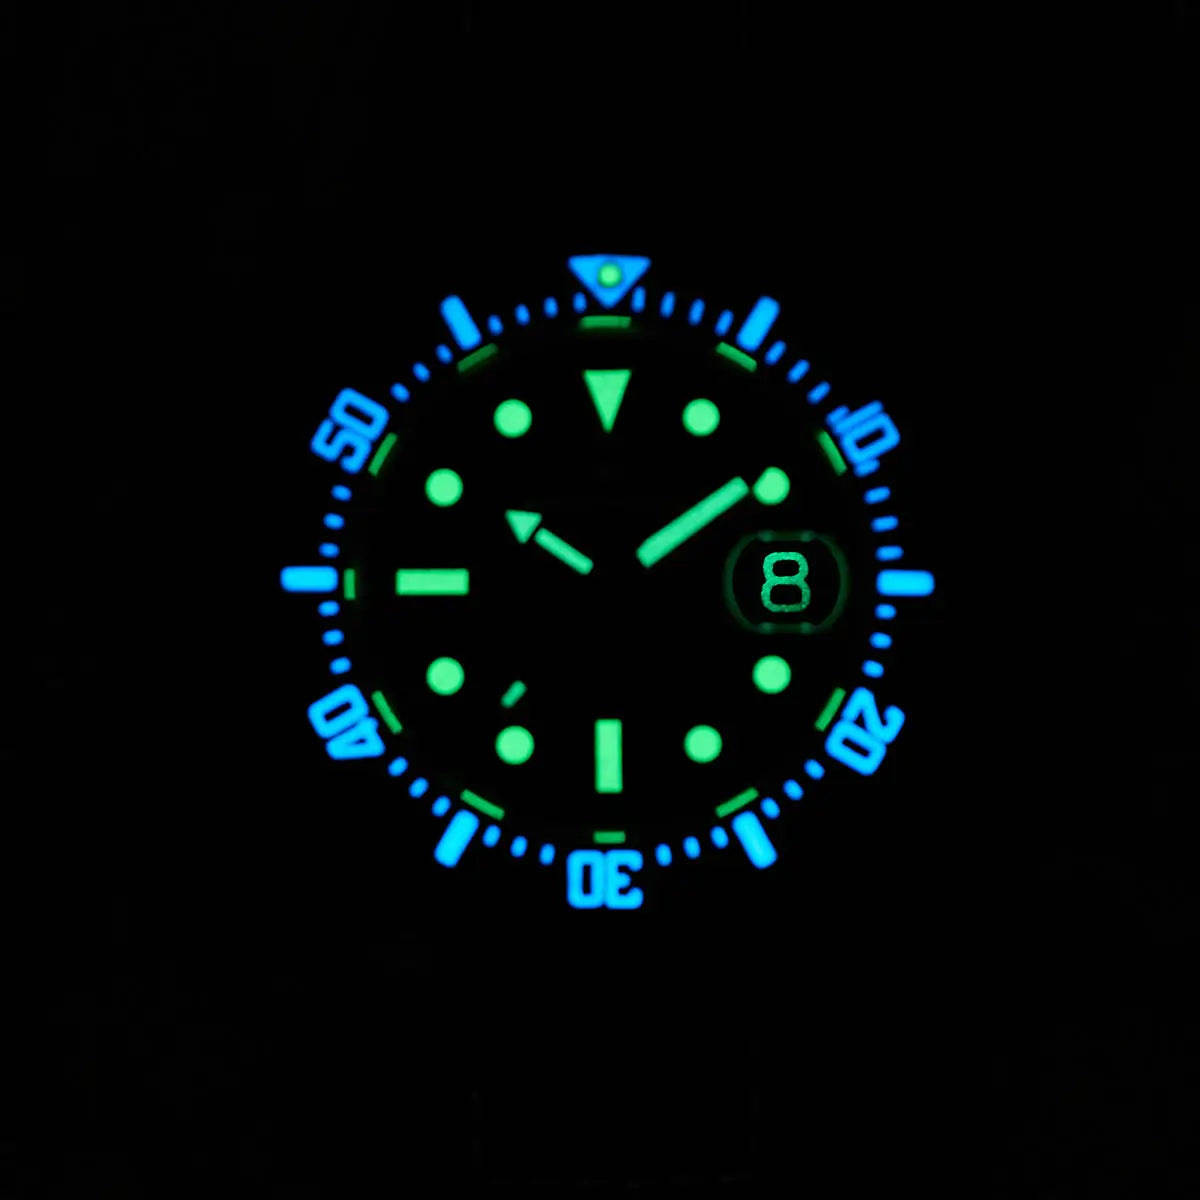 Neptune Carbon Fiber Watch. Red Dial/ Black Strap With Fiber. 40Mm. Aq-23009-01B